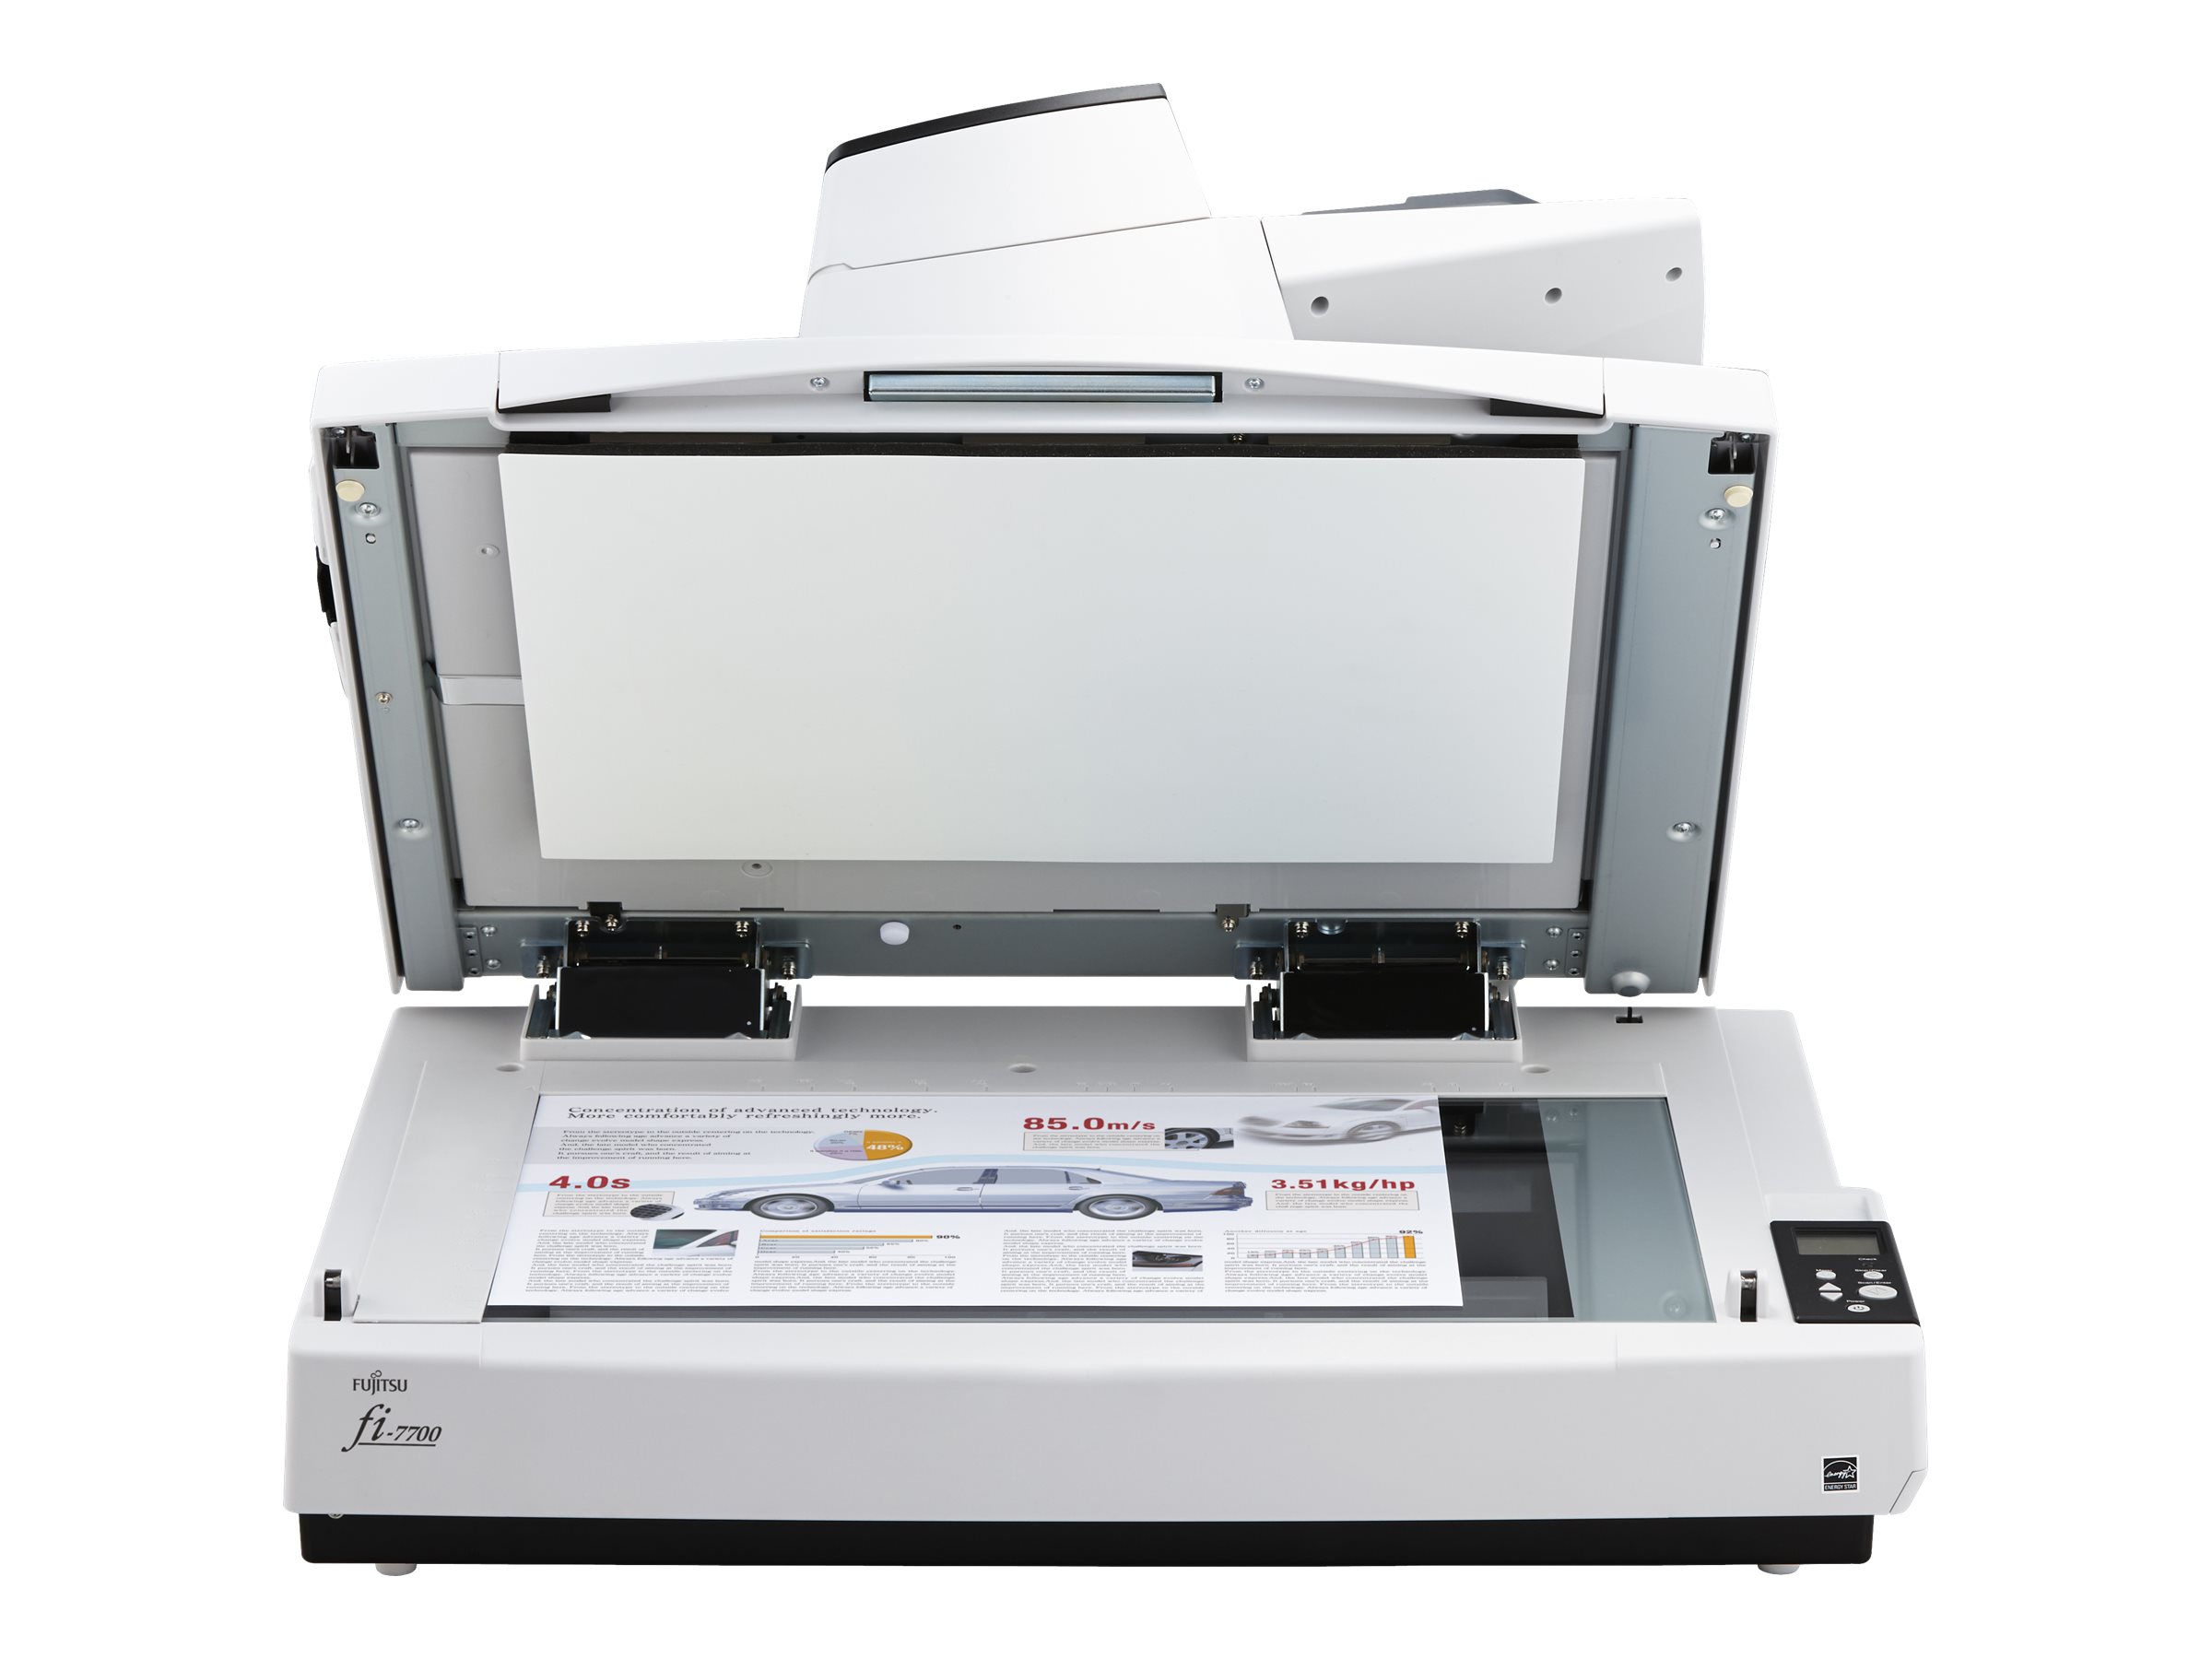 Fujitsu fi-7700S - Dokumentenscanner - Dual CCD - ARCH B - 600 dpi x 600 dpi - bis zu 75 Seiten/Min. (einfarbig)